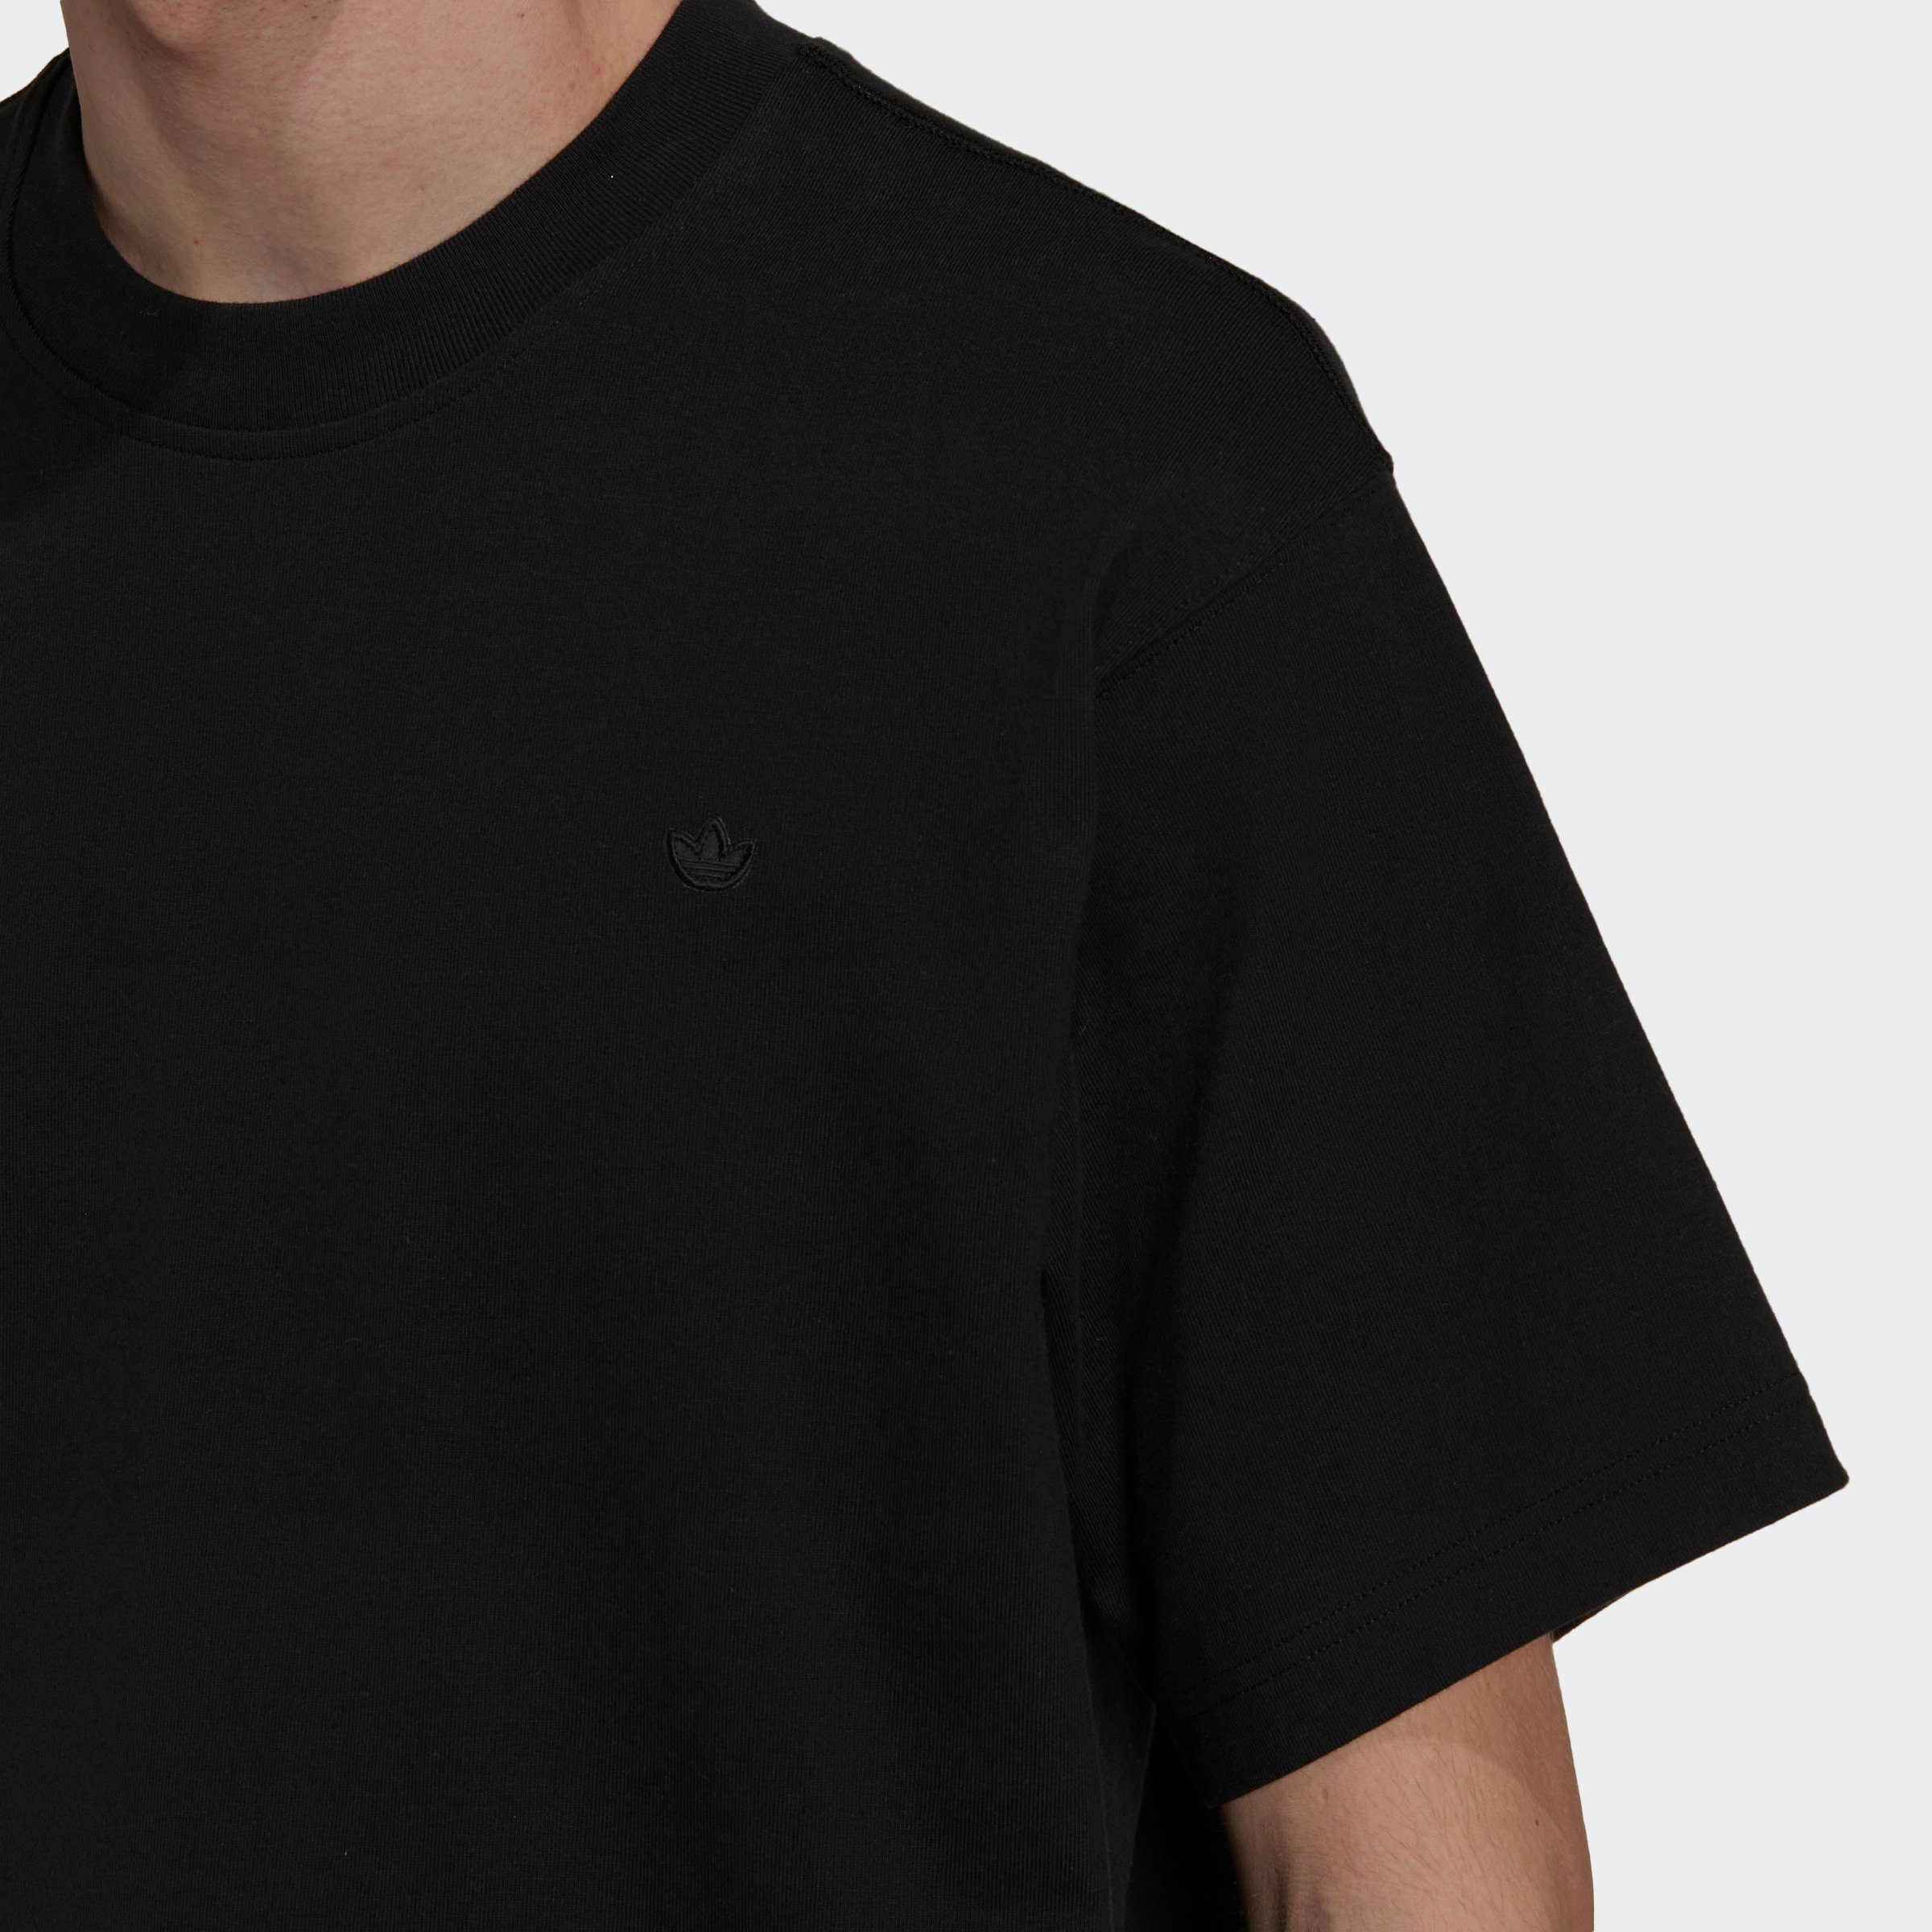 C Tee Originals adidas Black T-Shirt